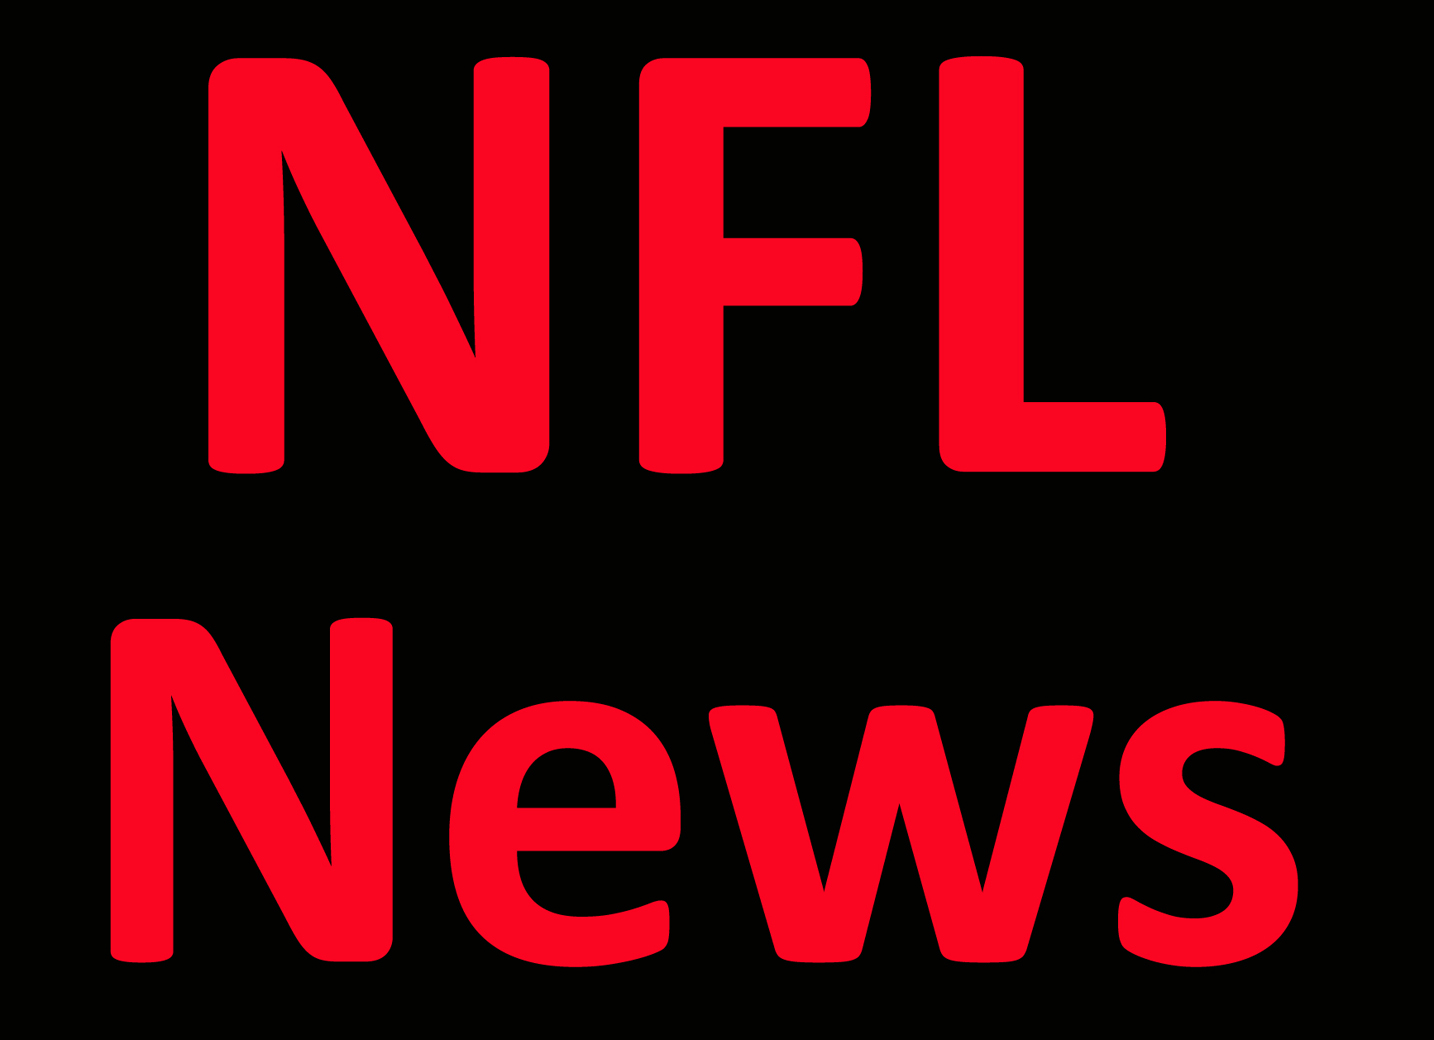 NFL News: Gruden: Emails ‘shameful’ but I’m ‘good person’ Per Report